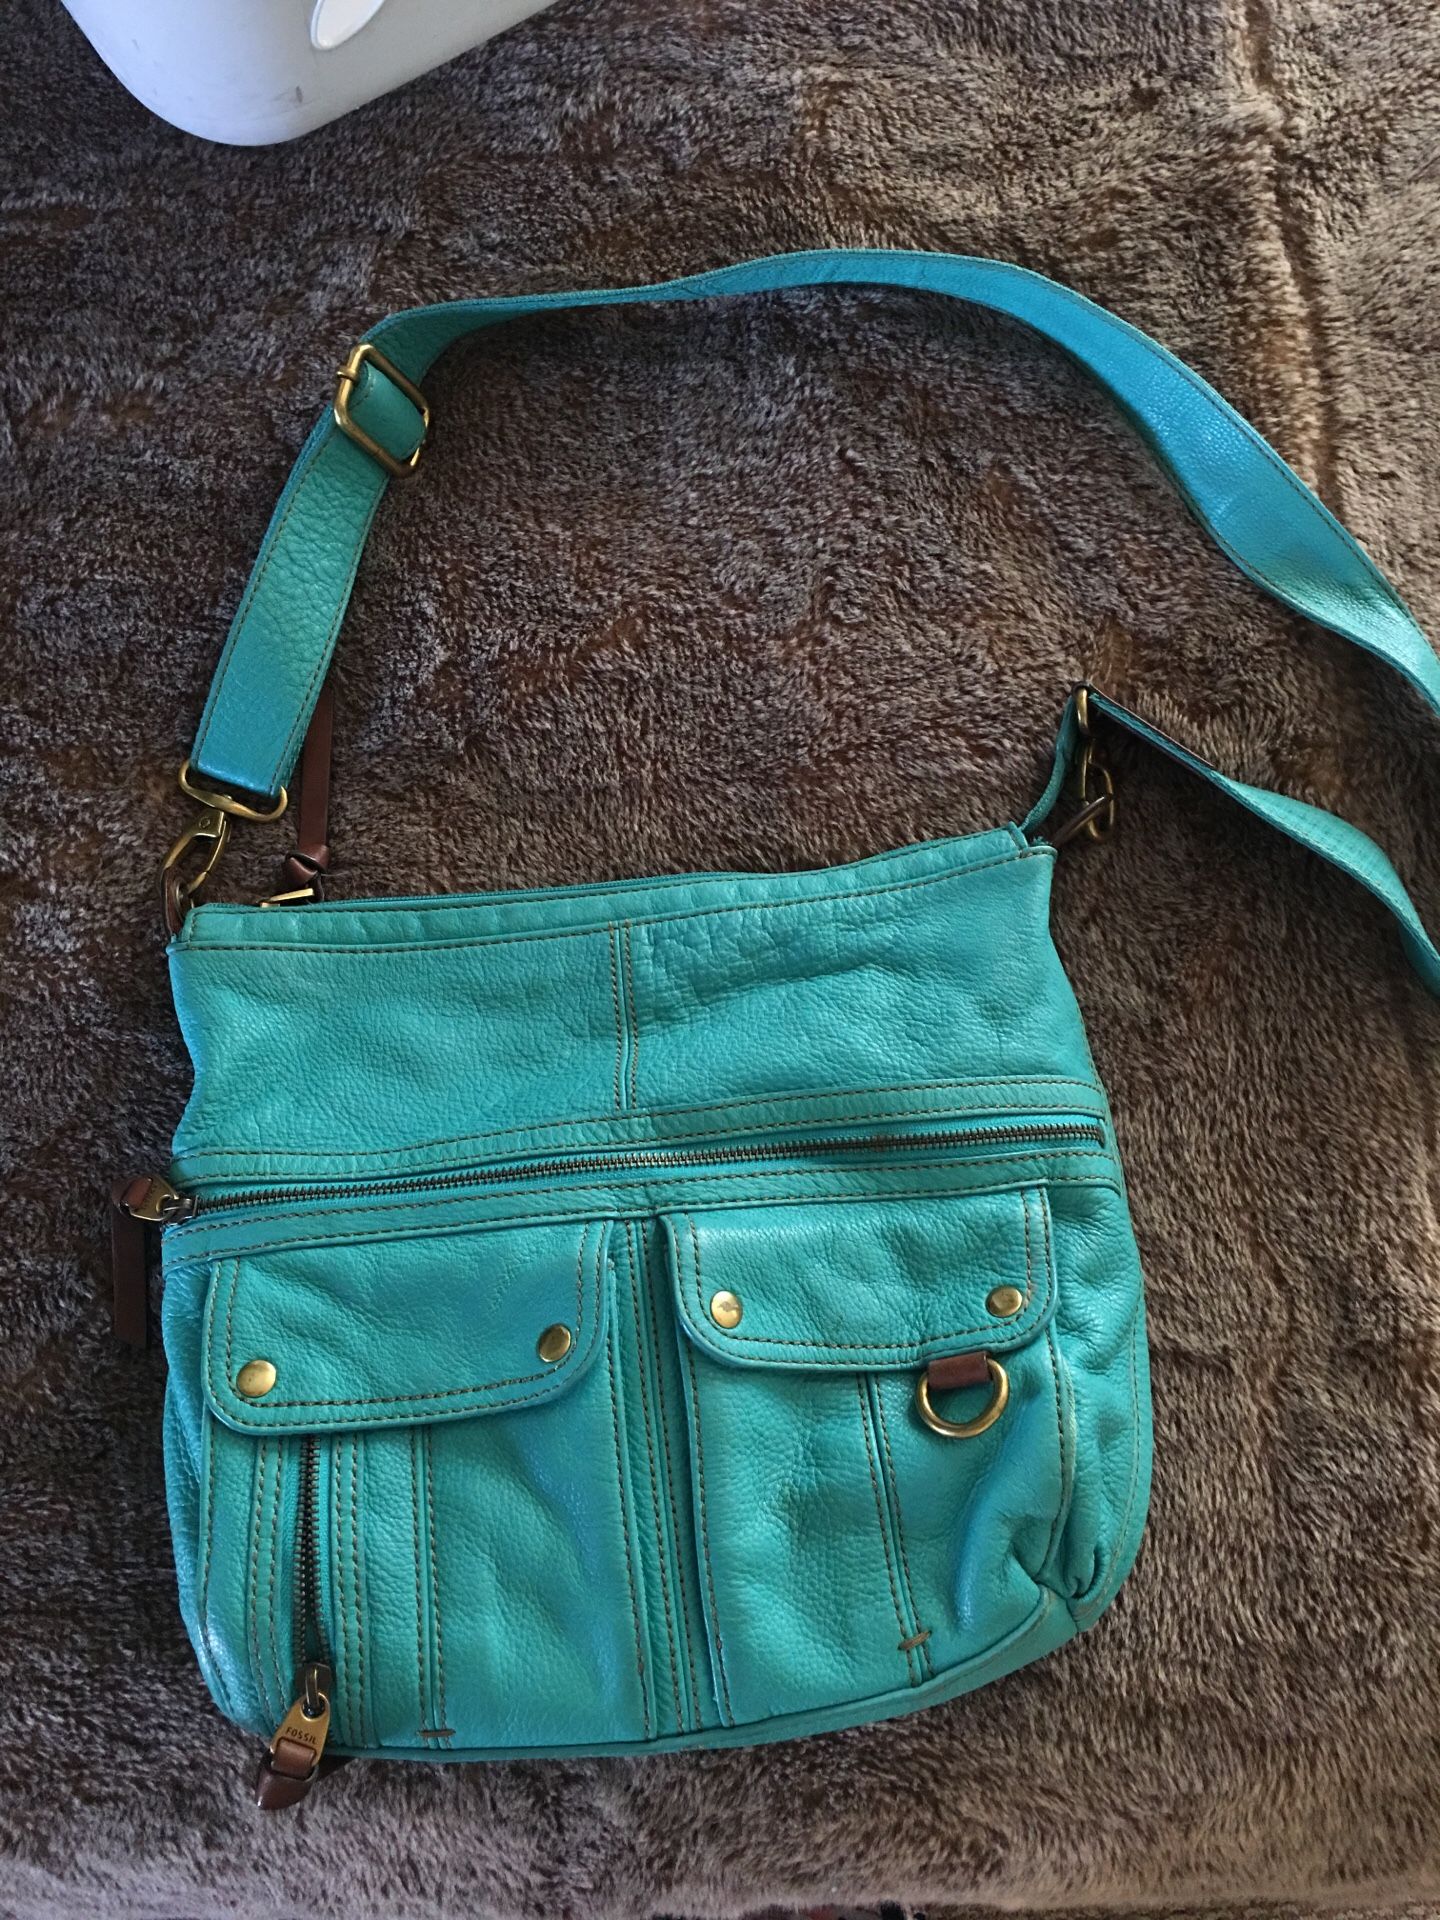 Fossil purse. Messenger bag. Leather